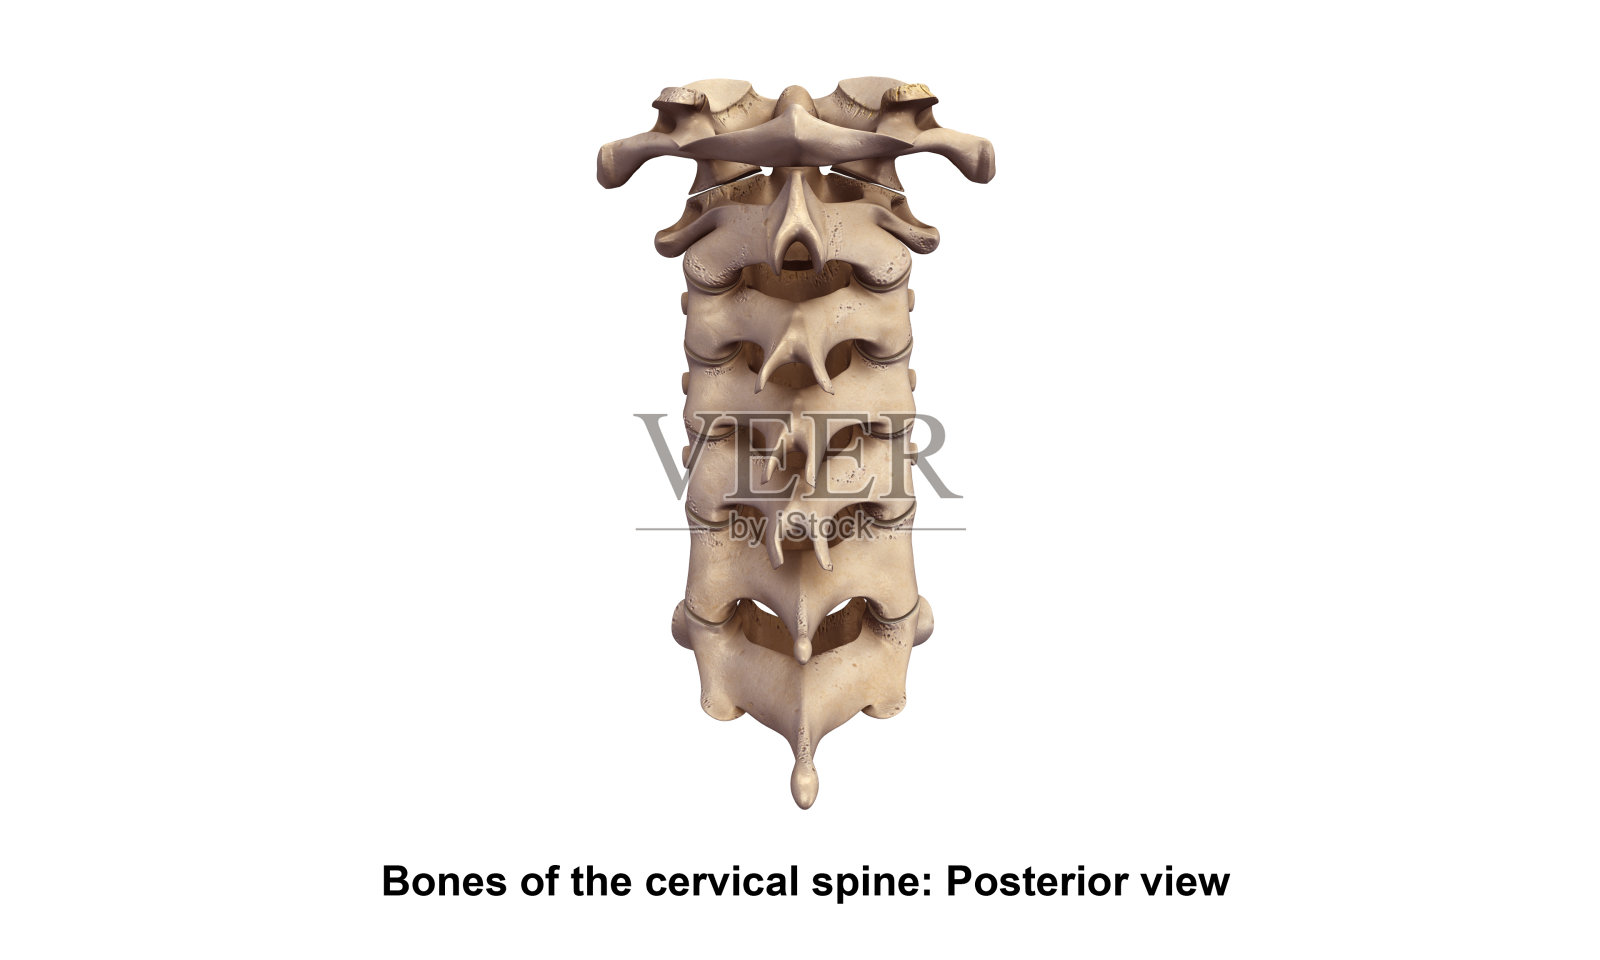 Cervicle spine_Posterior视图照片摄影图片